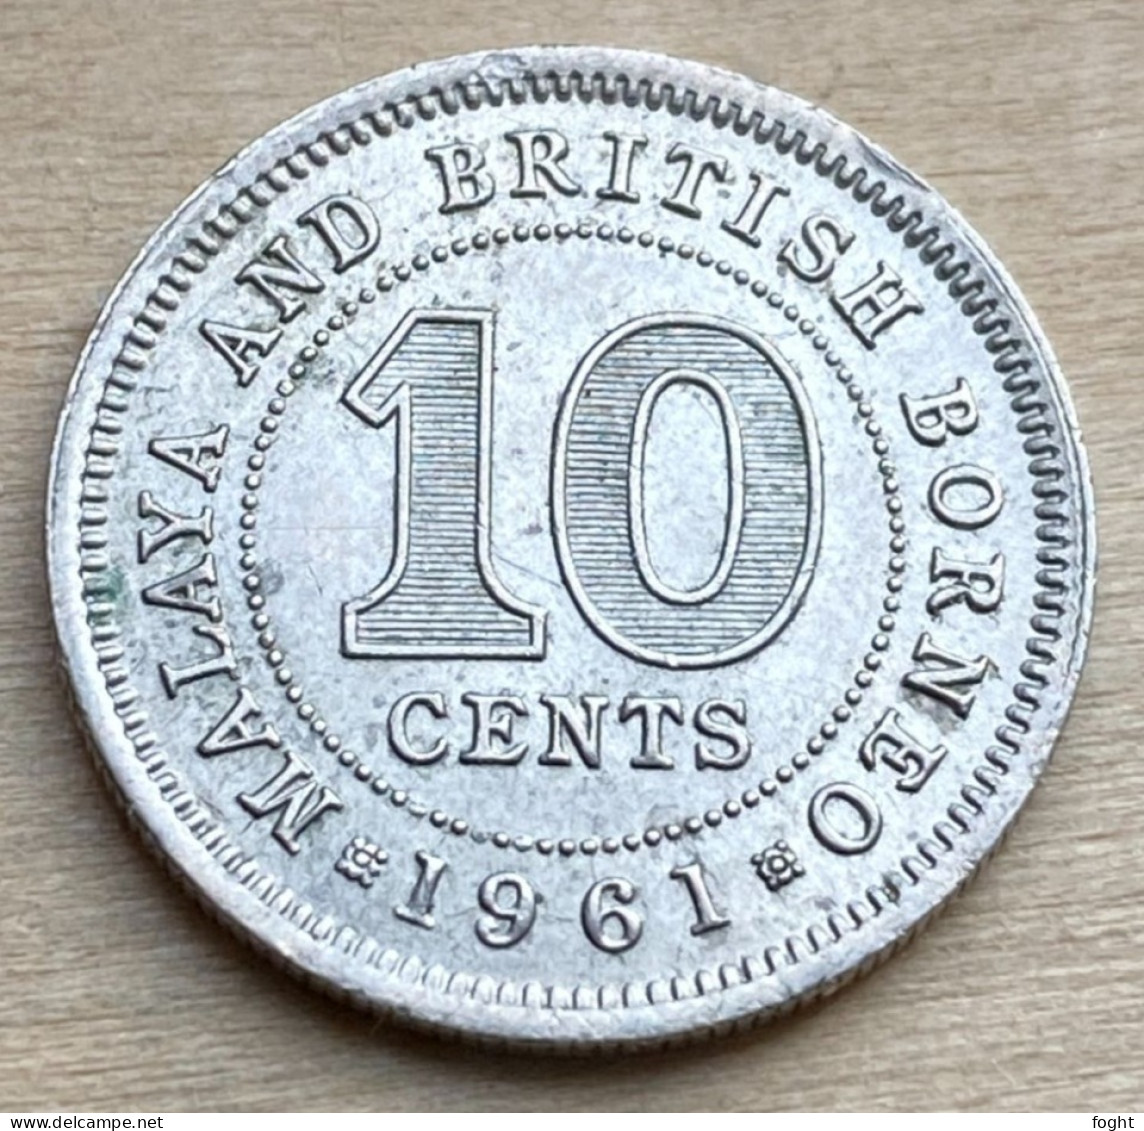 1961 Malaya & British Borneo British Colony Coin 10 Cents,KM#2,7362K - Maleisië